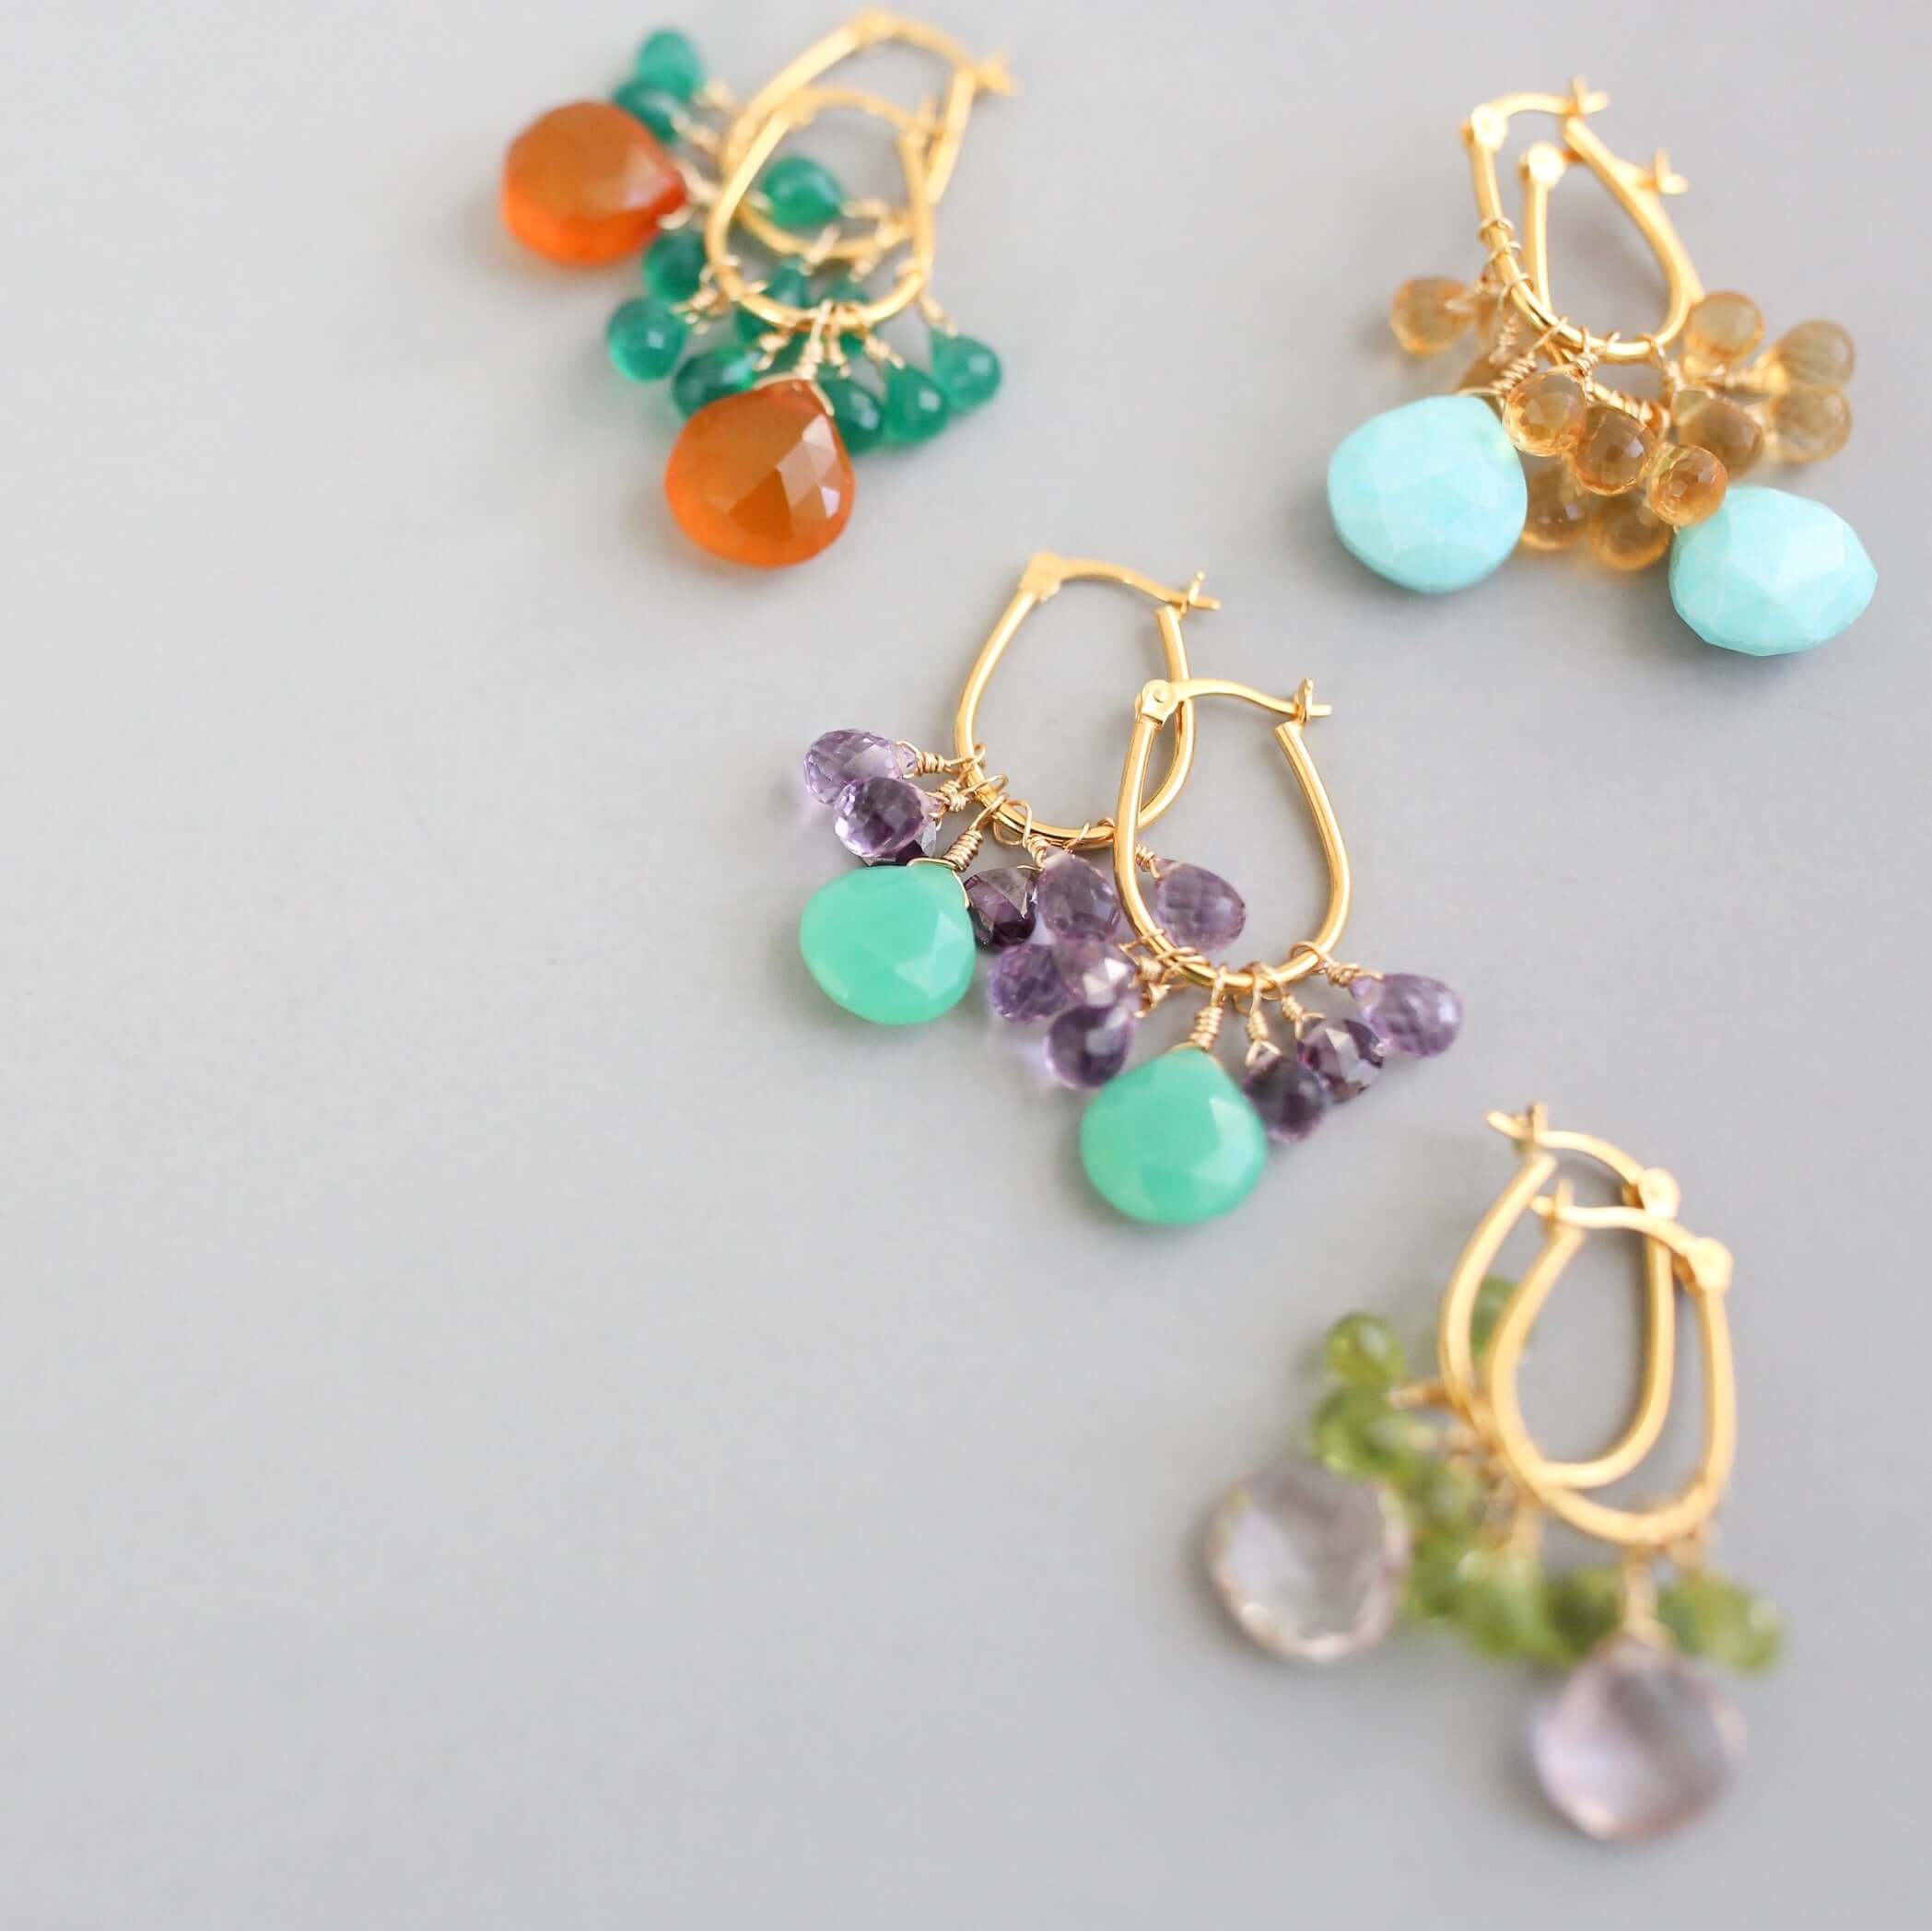 Colorful Earrings with Gemstones